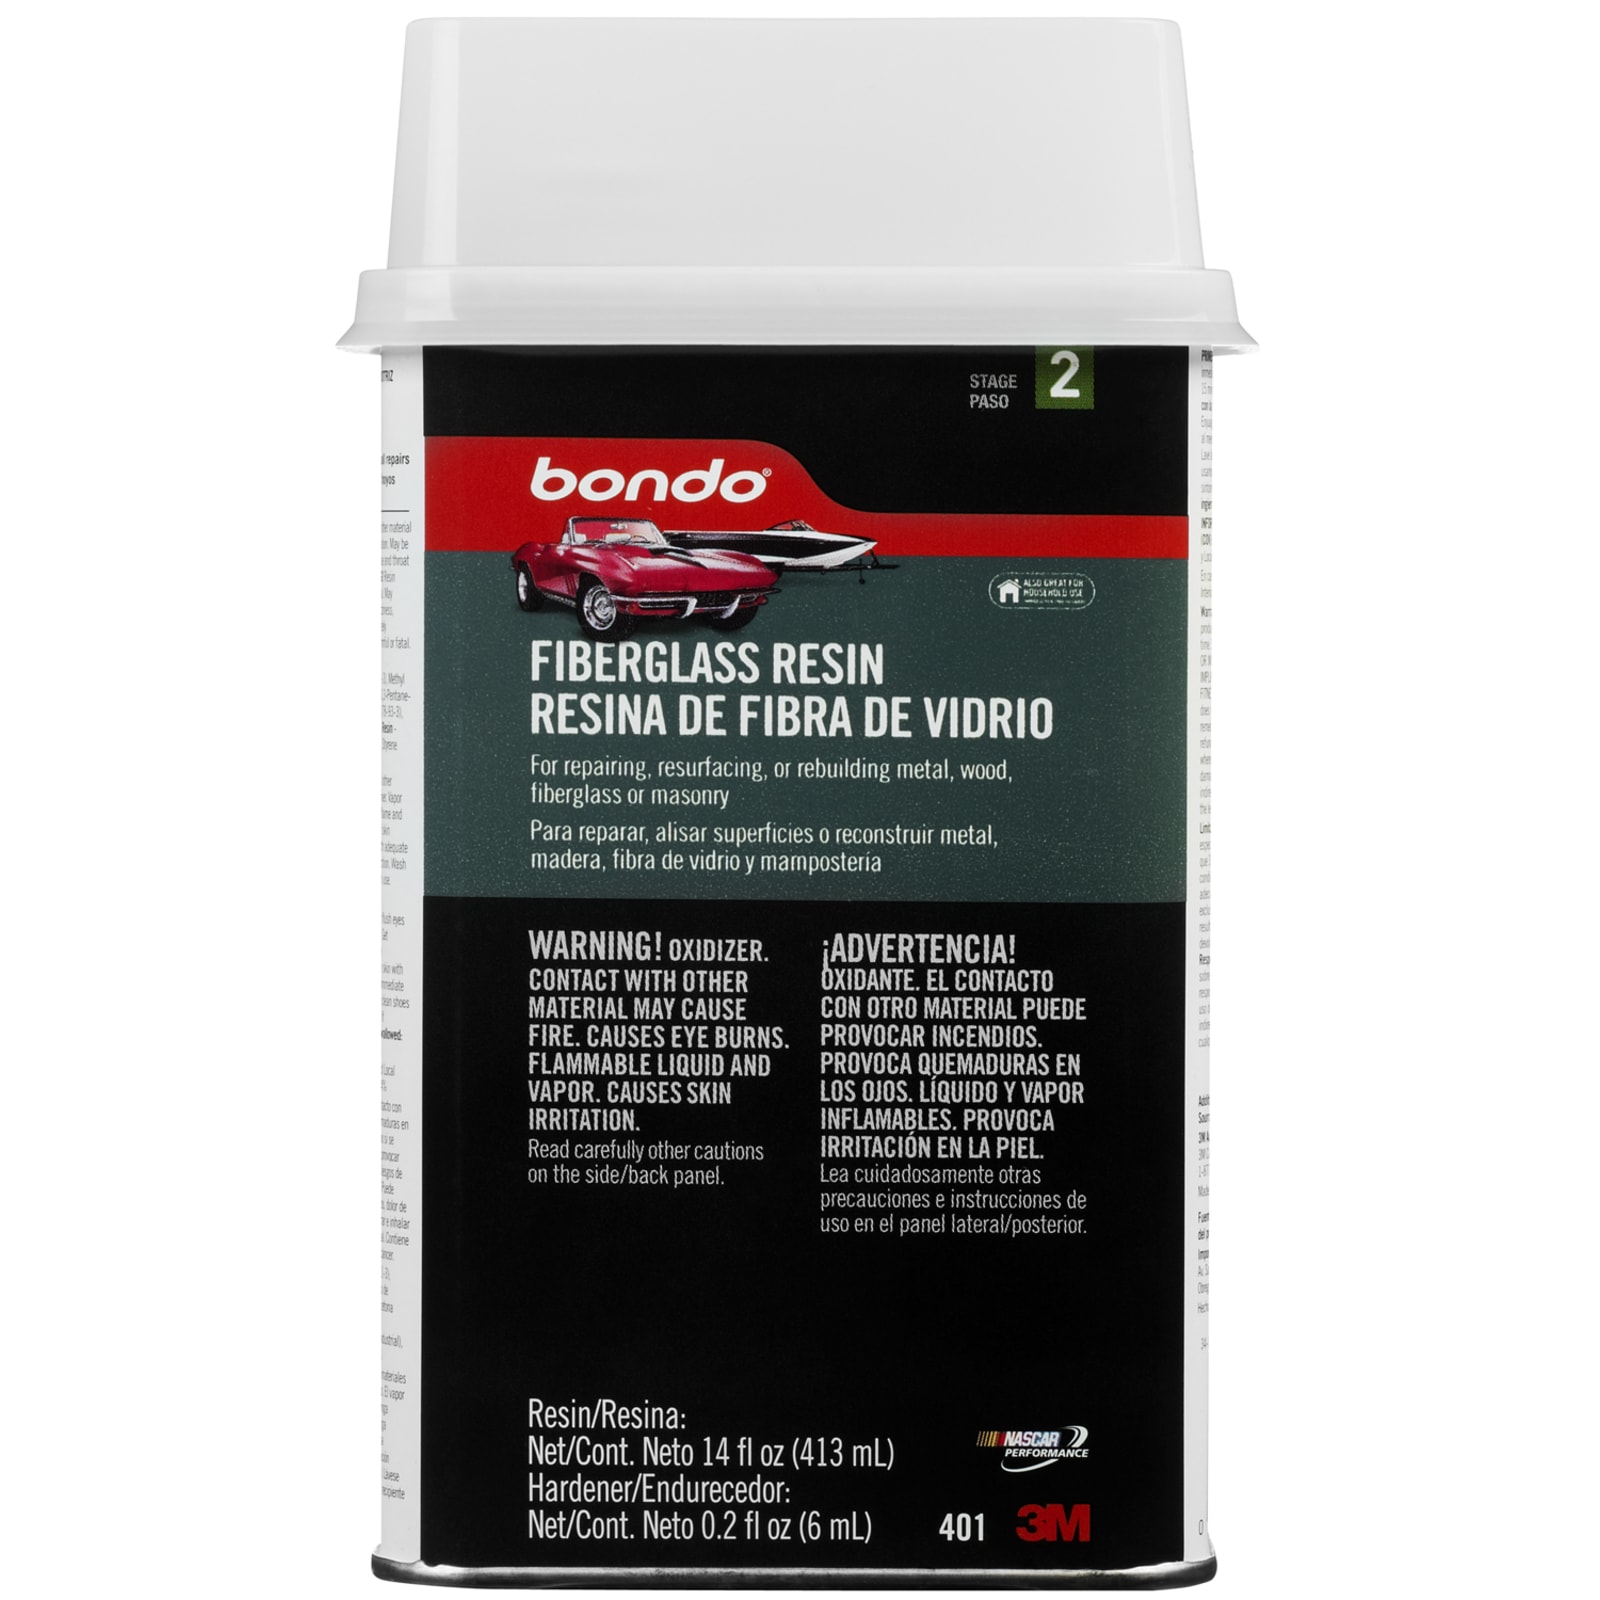  Bondo Fiberglass Resin, 00404, 0.9 Gallon Can : Automotive